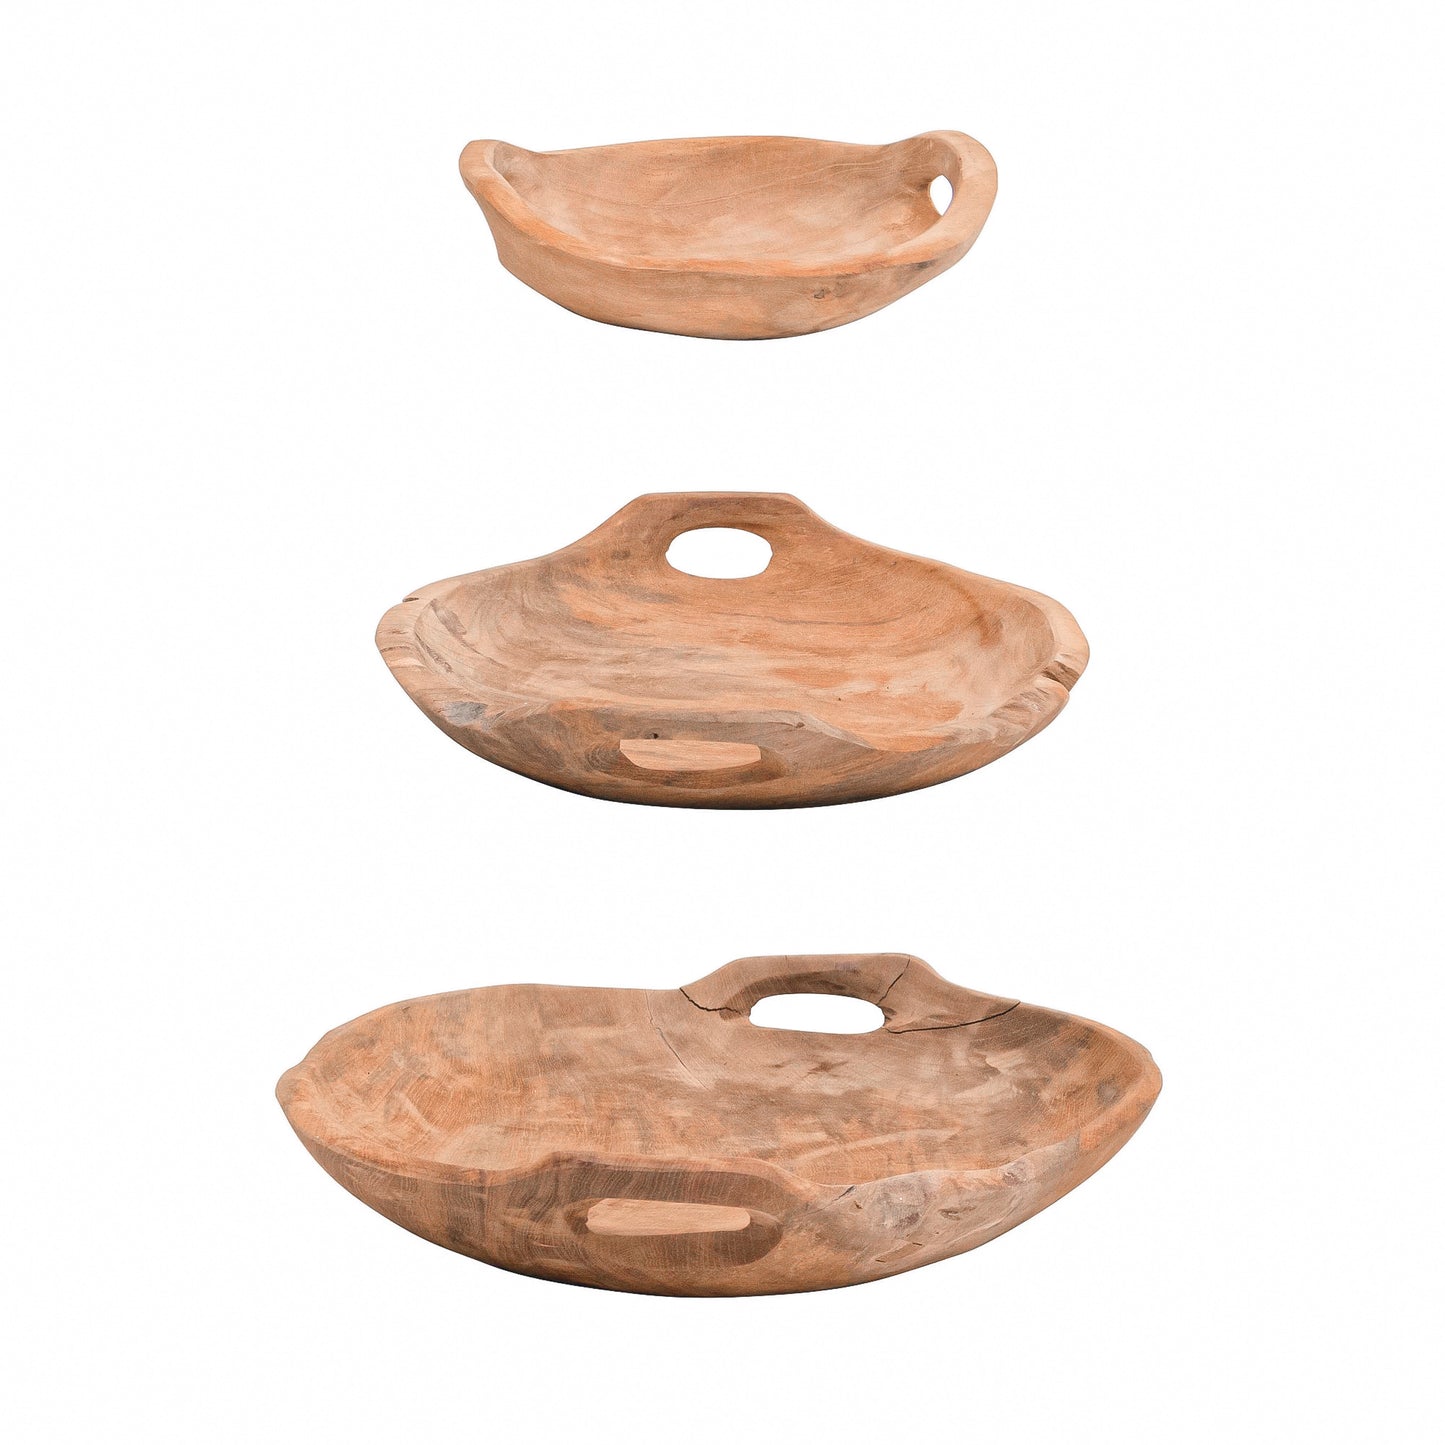 Teak wood bowls with handles